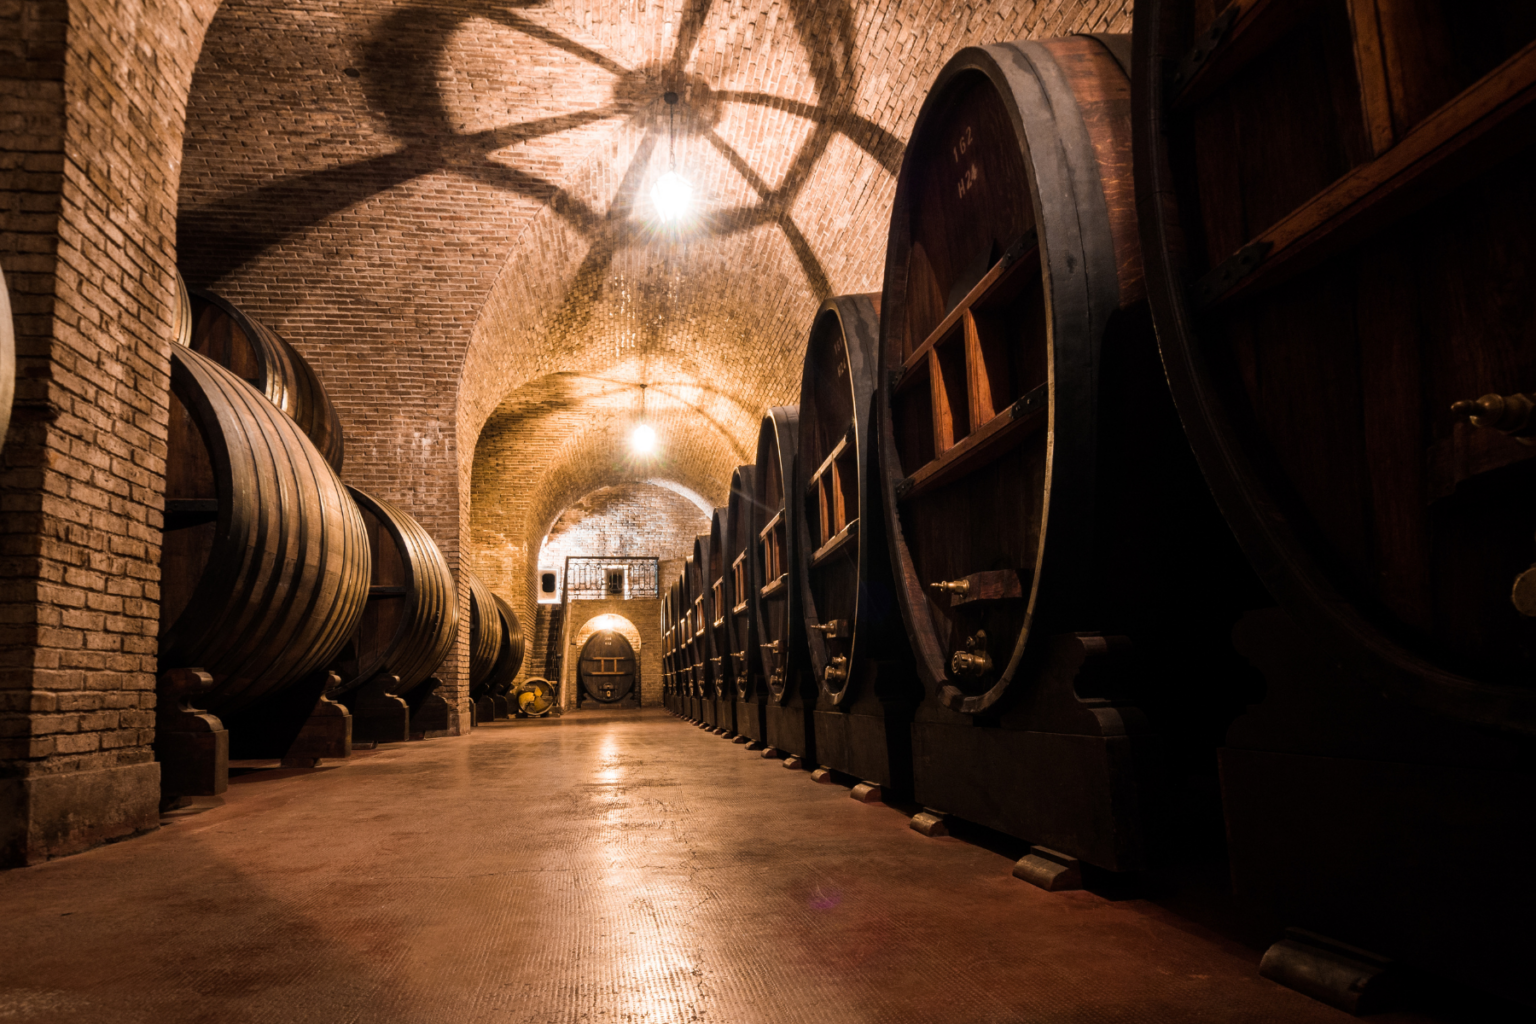 Wine barrels in brick room